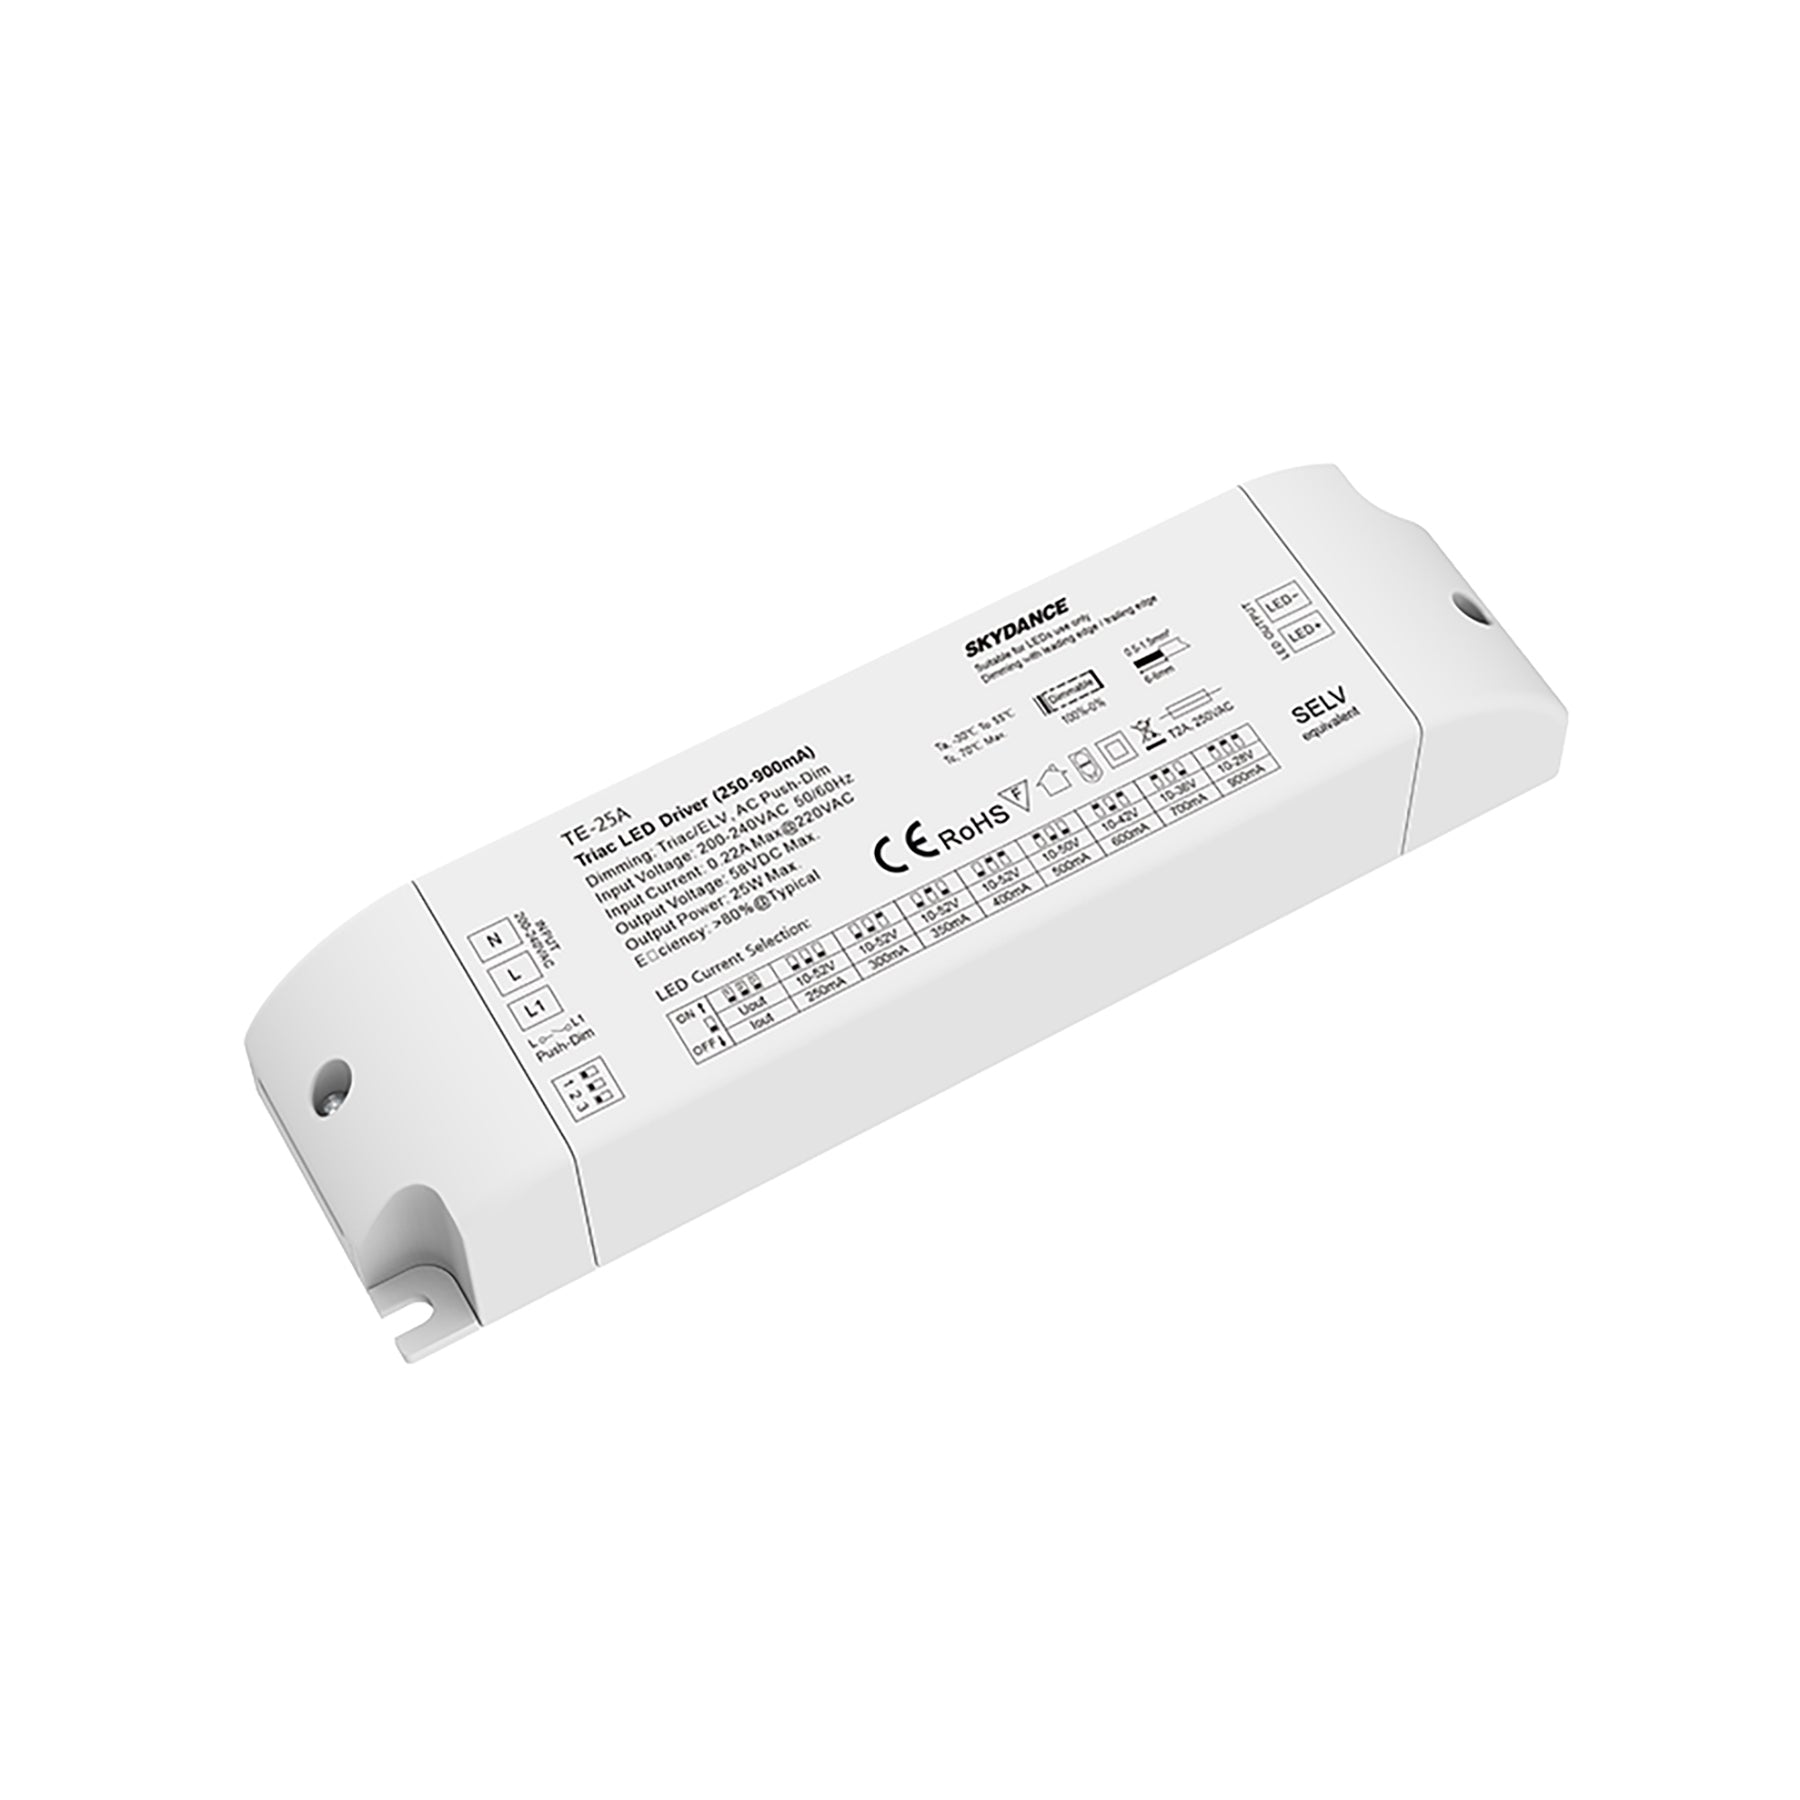 G.W.S LED Wholesale LED Drivers/LED Power Supplies 25W 250-900mA Triac Dimmable LED Driver TE-25A